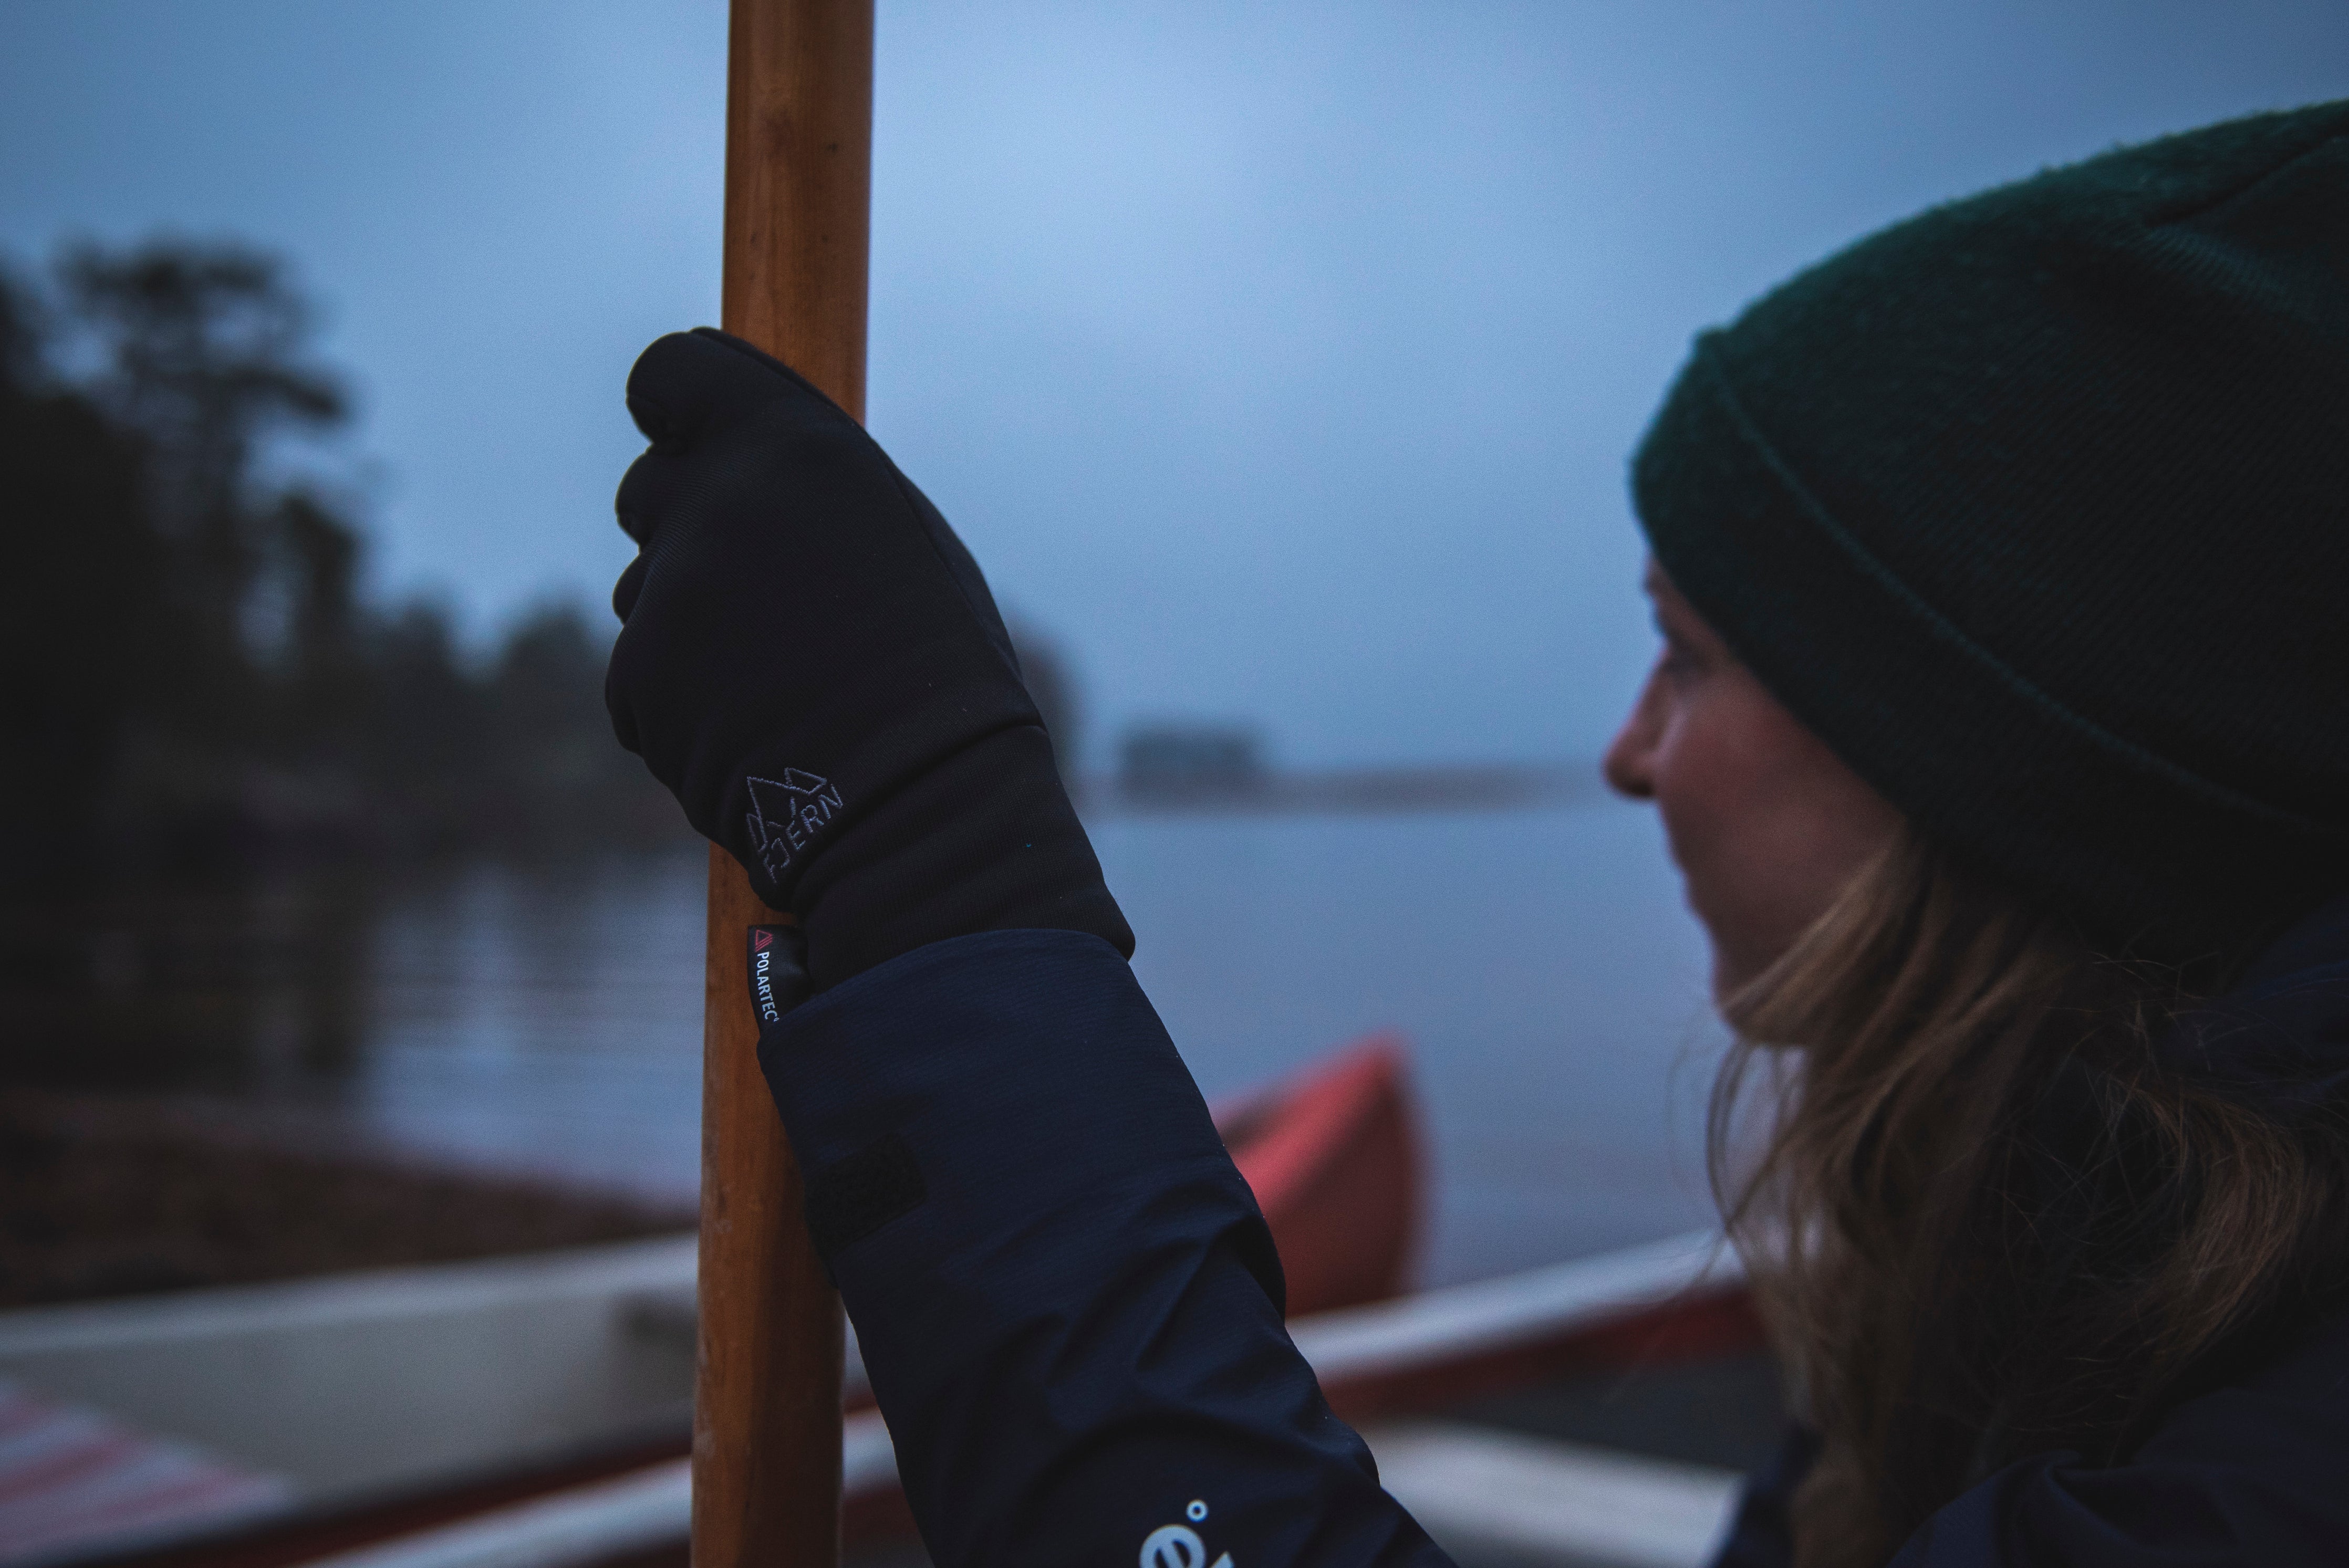 Fjern Polartec Gloves holding a boat mast on a foggy lake